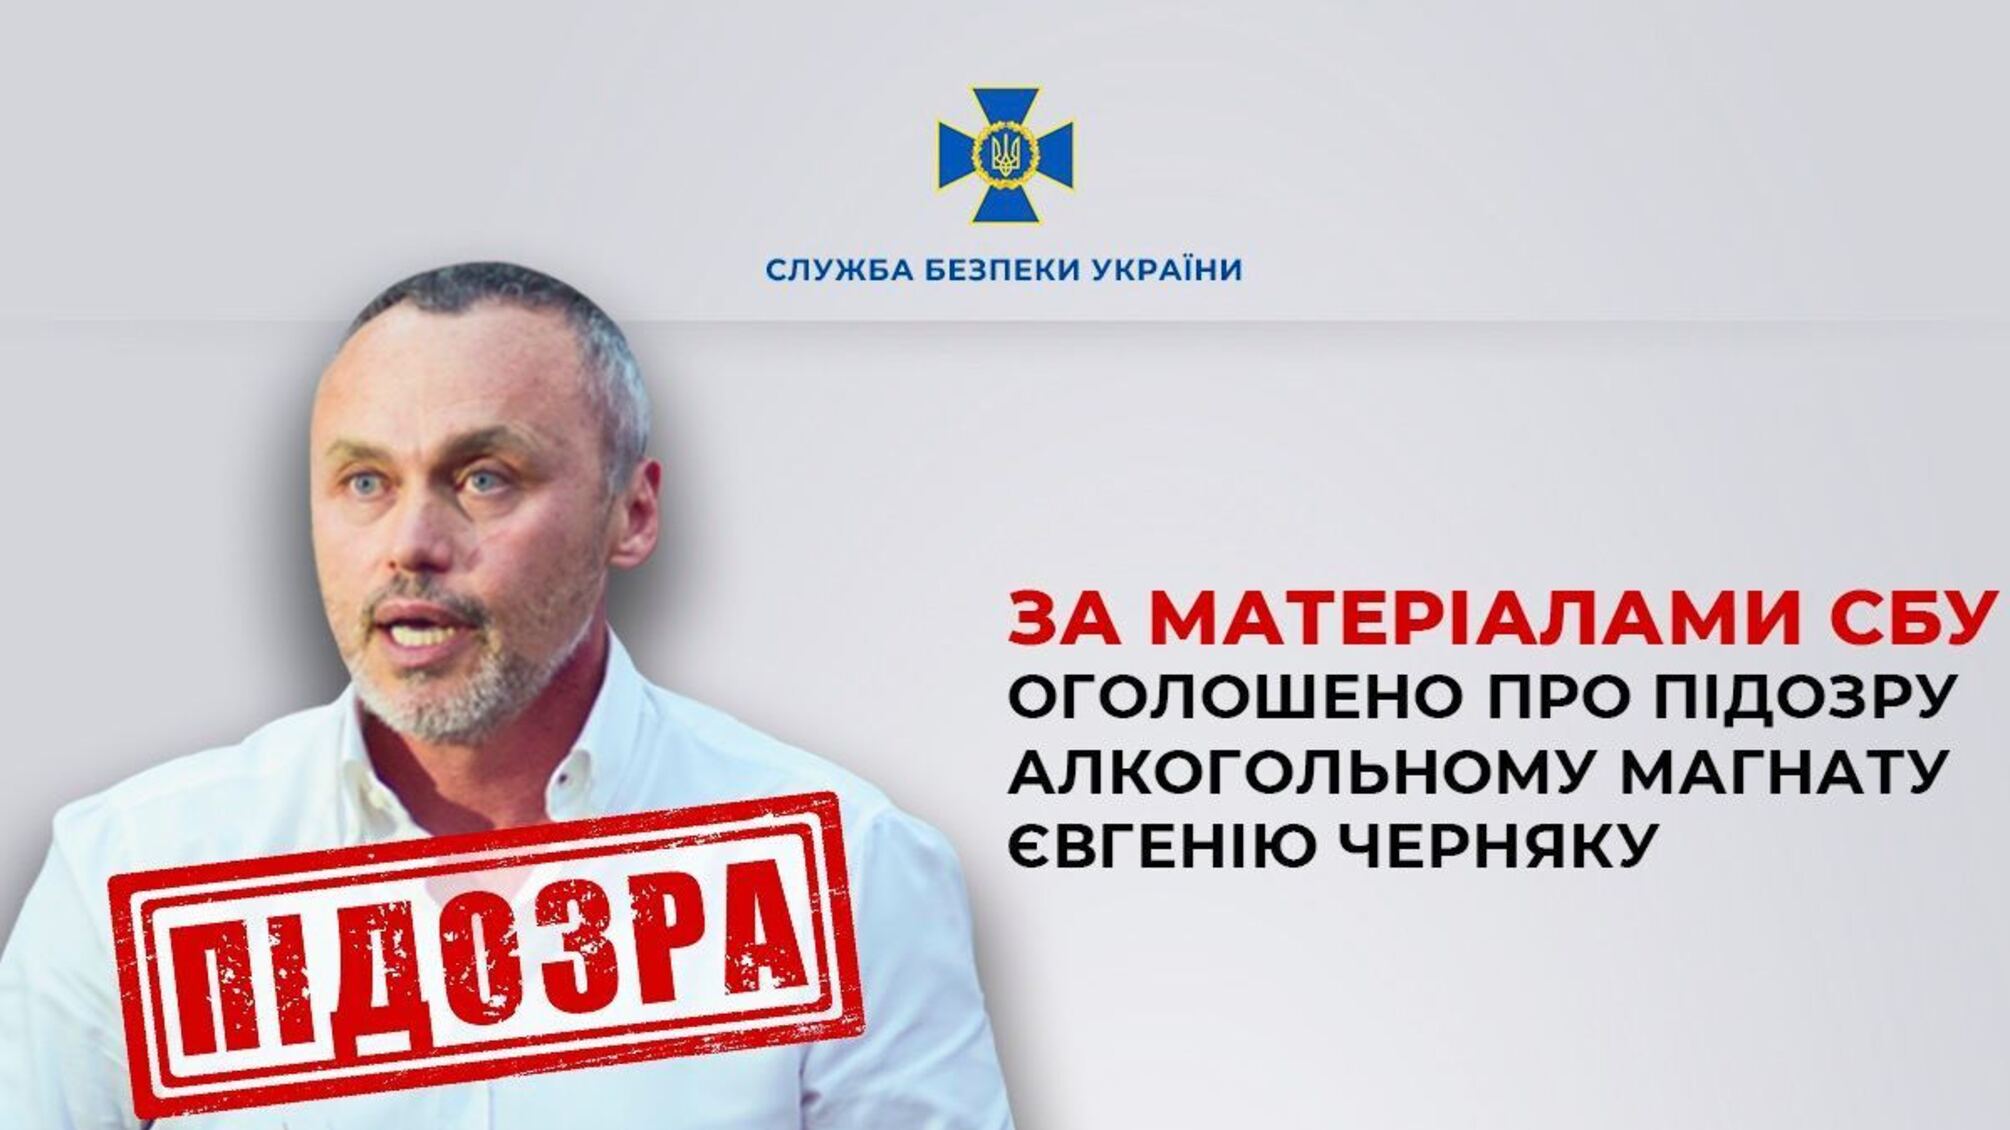 СБУ оголосила підозру алкогольному магнату Євгенію Черняку